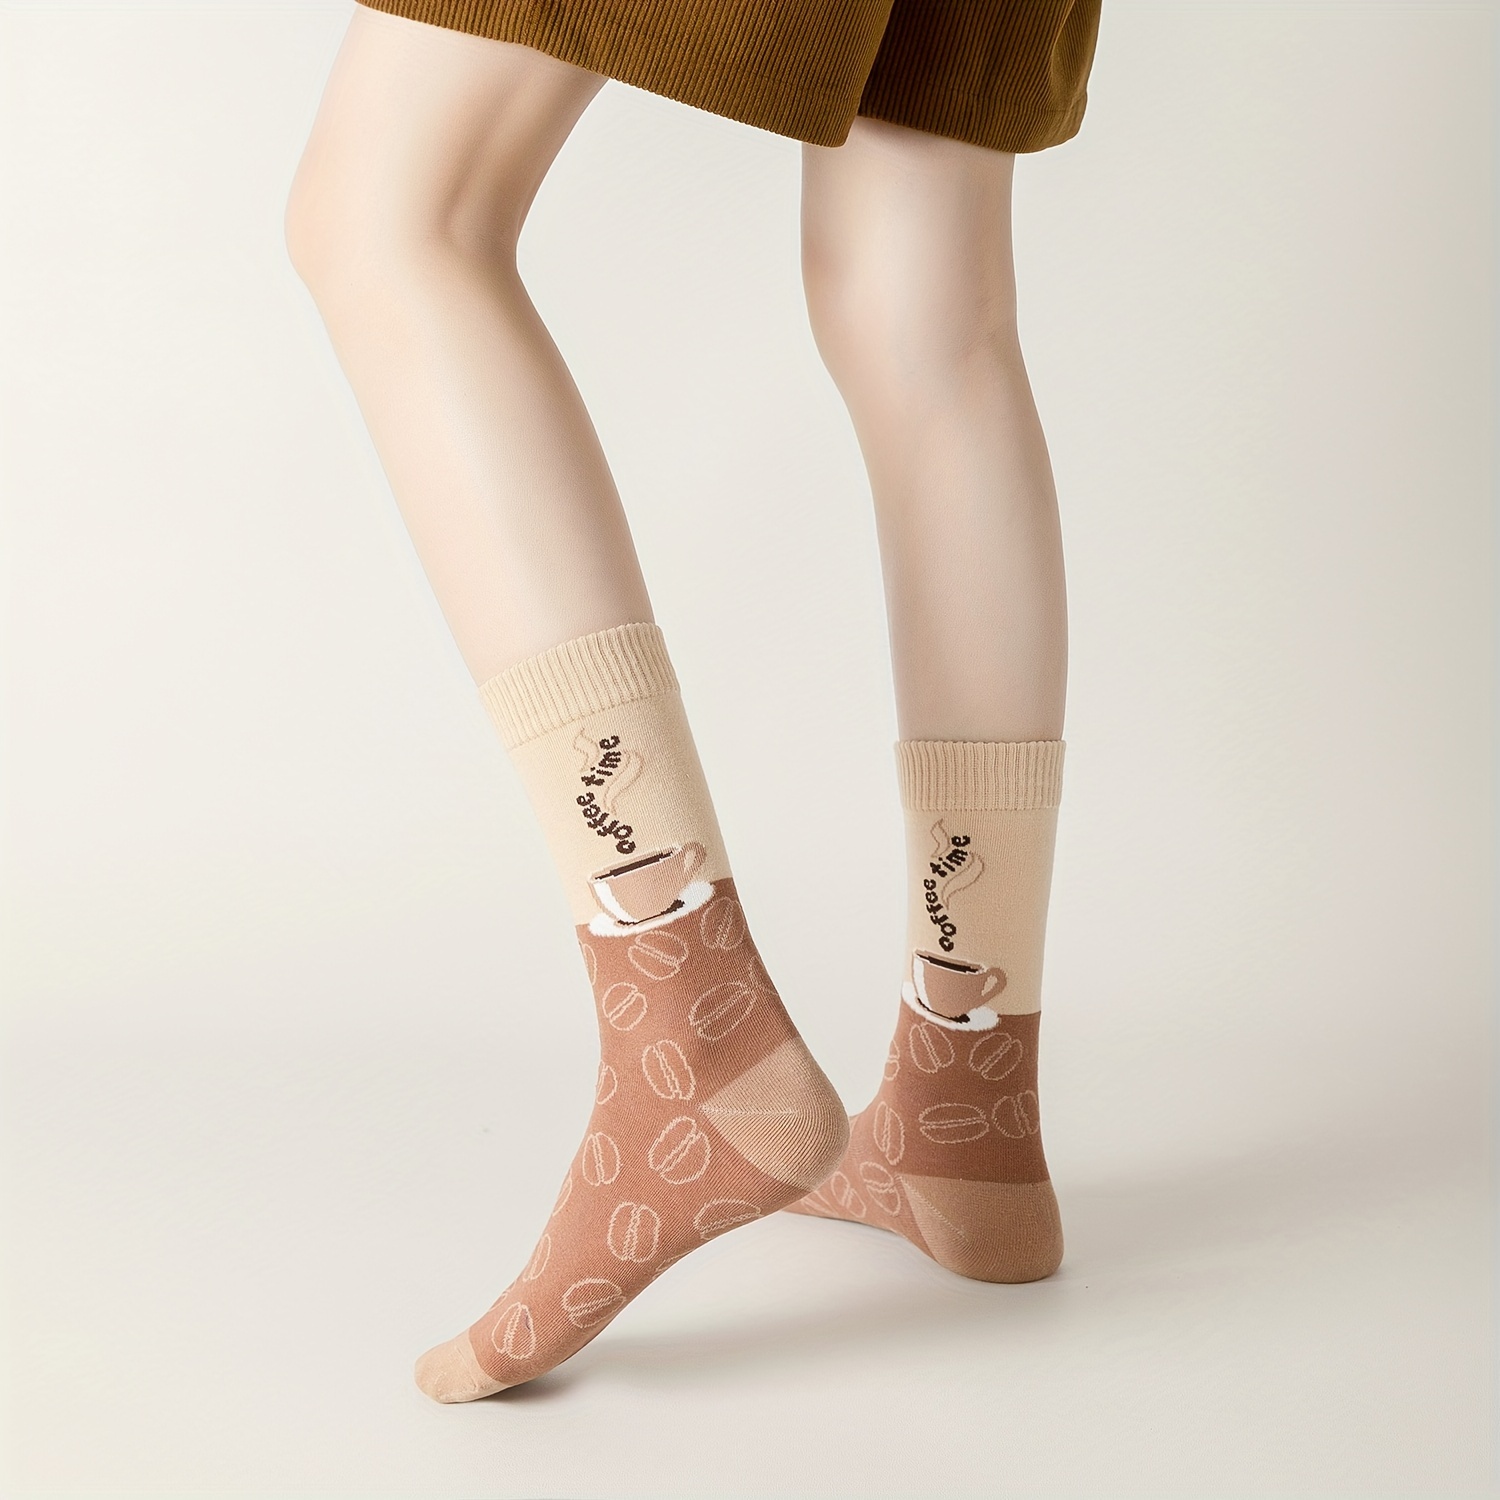 5 pairs coffee print socks comfy breathable mid tube socks womens stockings hosiery details 12